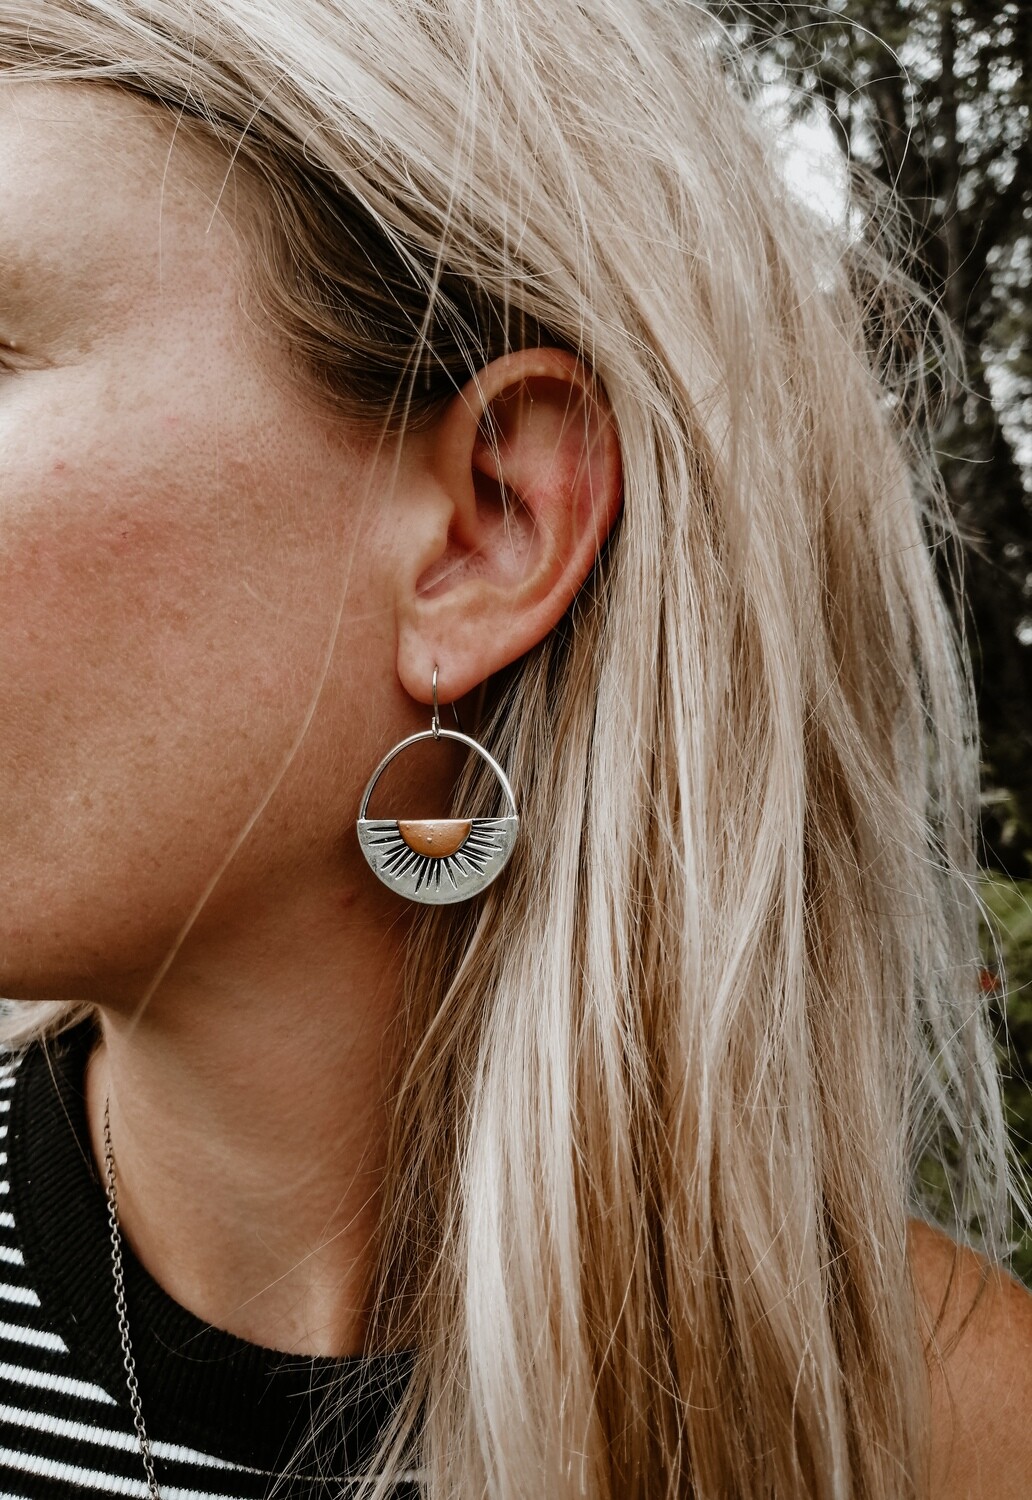 Sunny Daze earrings